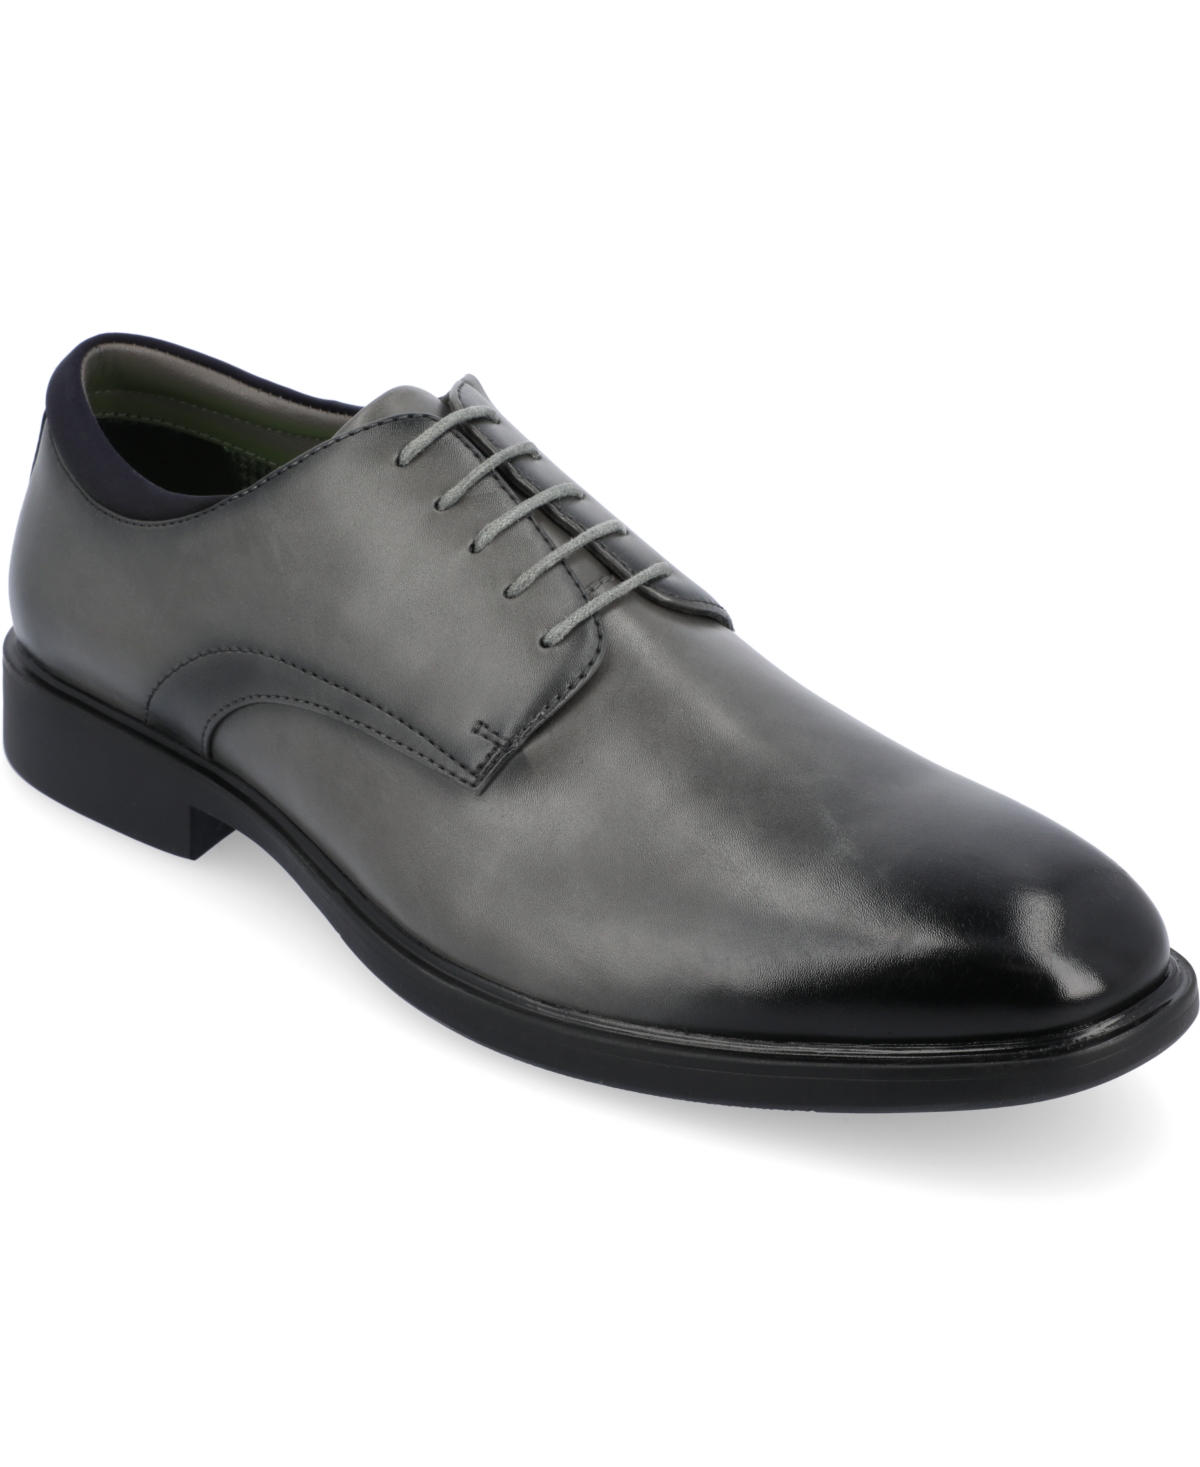 Men's Kimball Plain Toe Dress Shoes - Navy